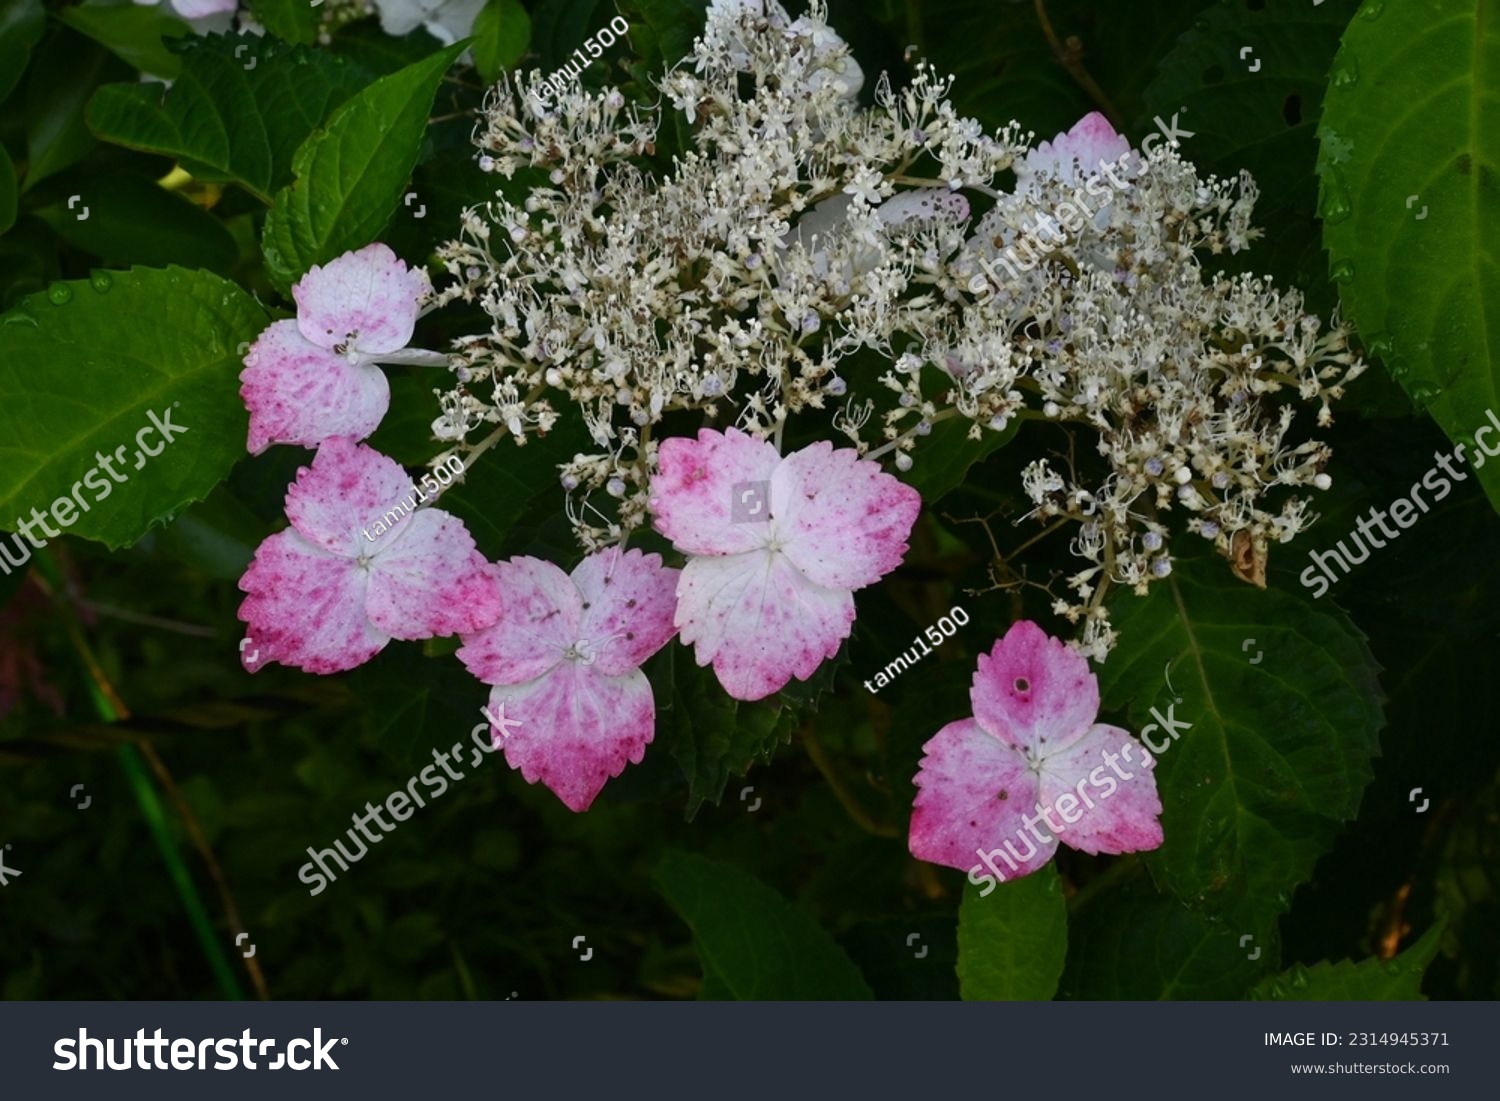 Hydrangea flowers. Seasonal background material. Hydrangea flowers are a seasonal tradition in Japan during the rainy season. #2314945371